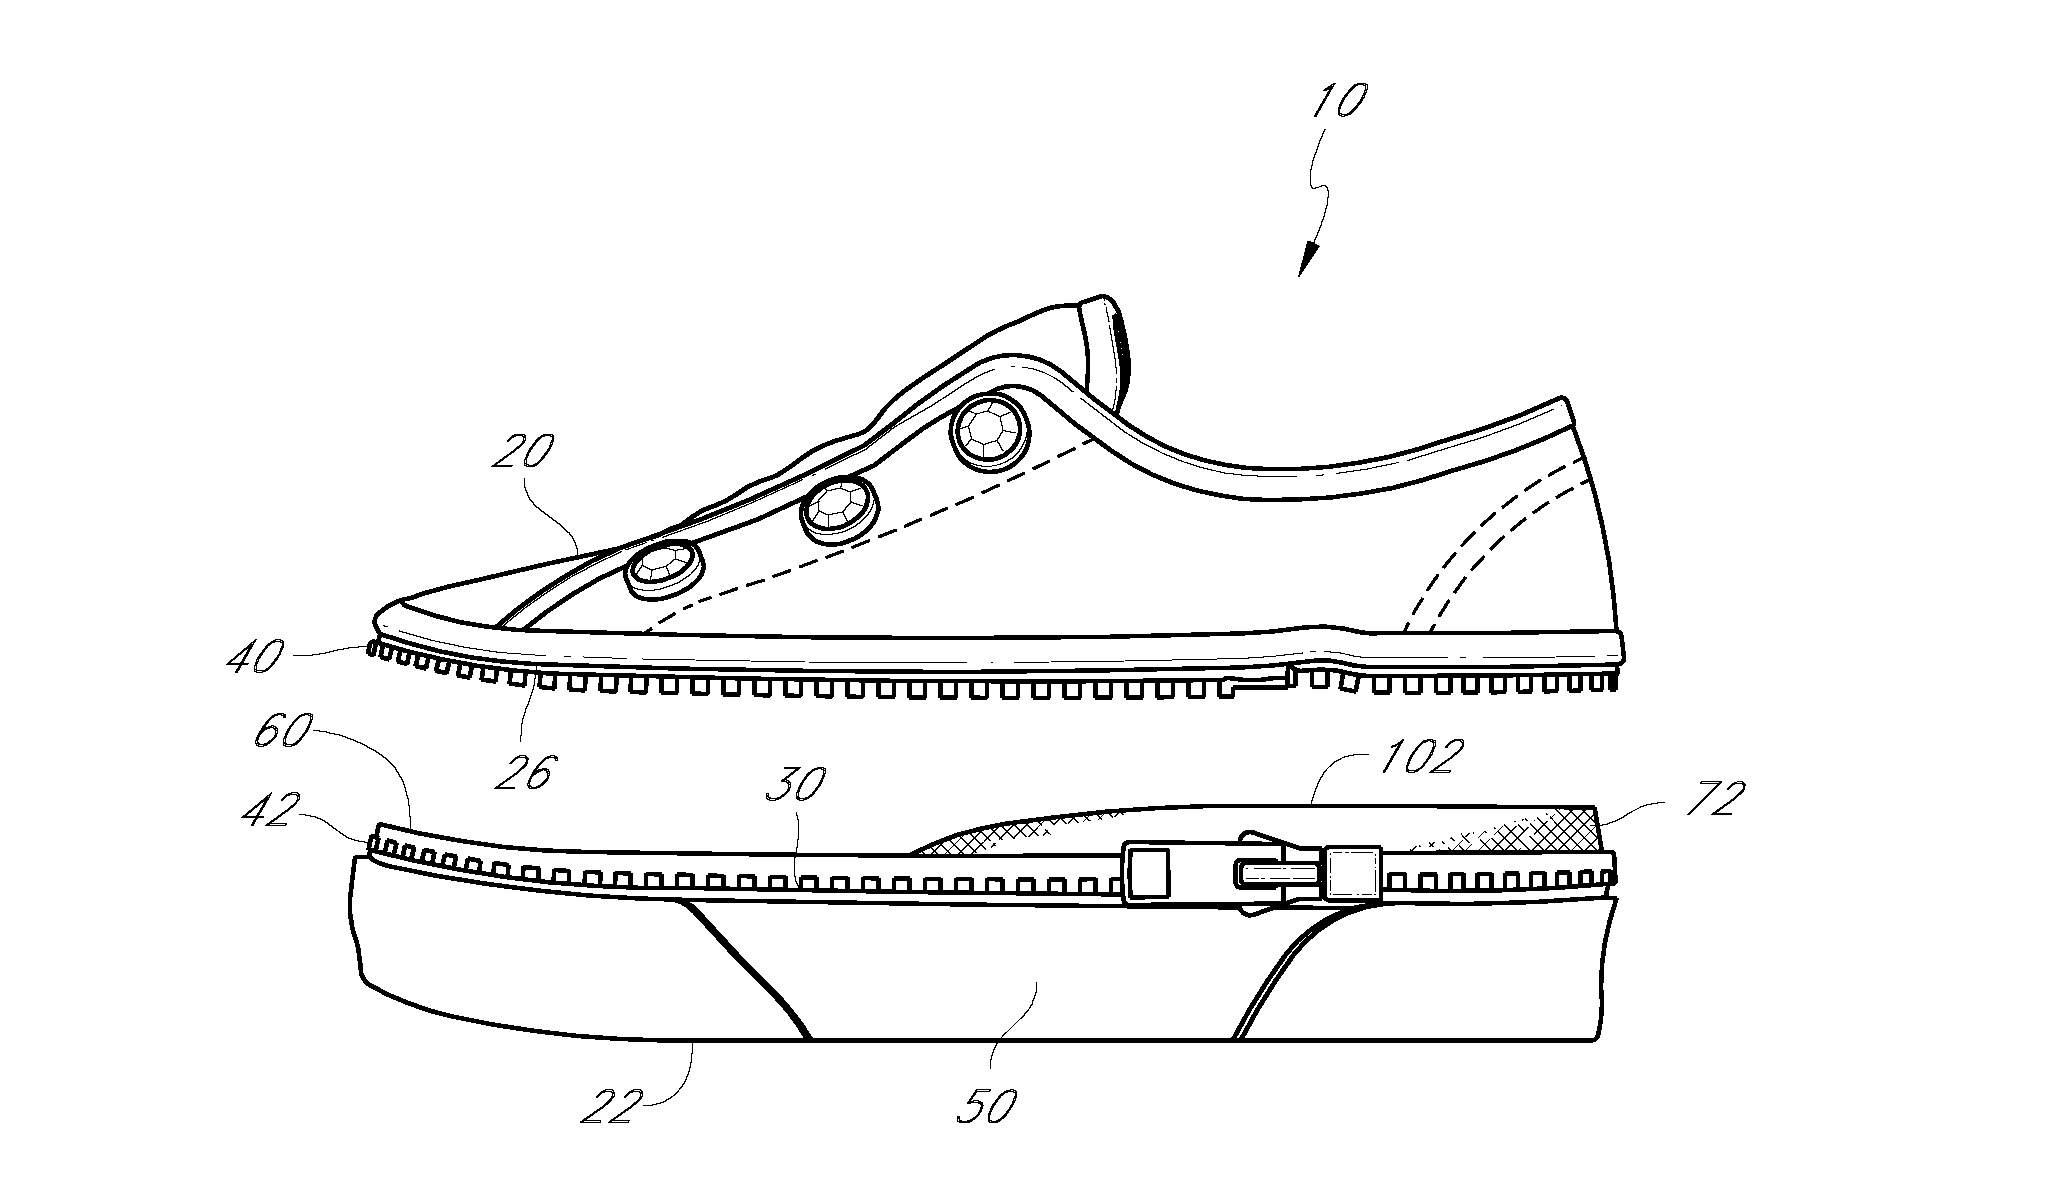 Interchangeable component shoe system